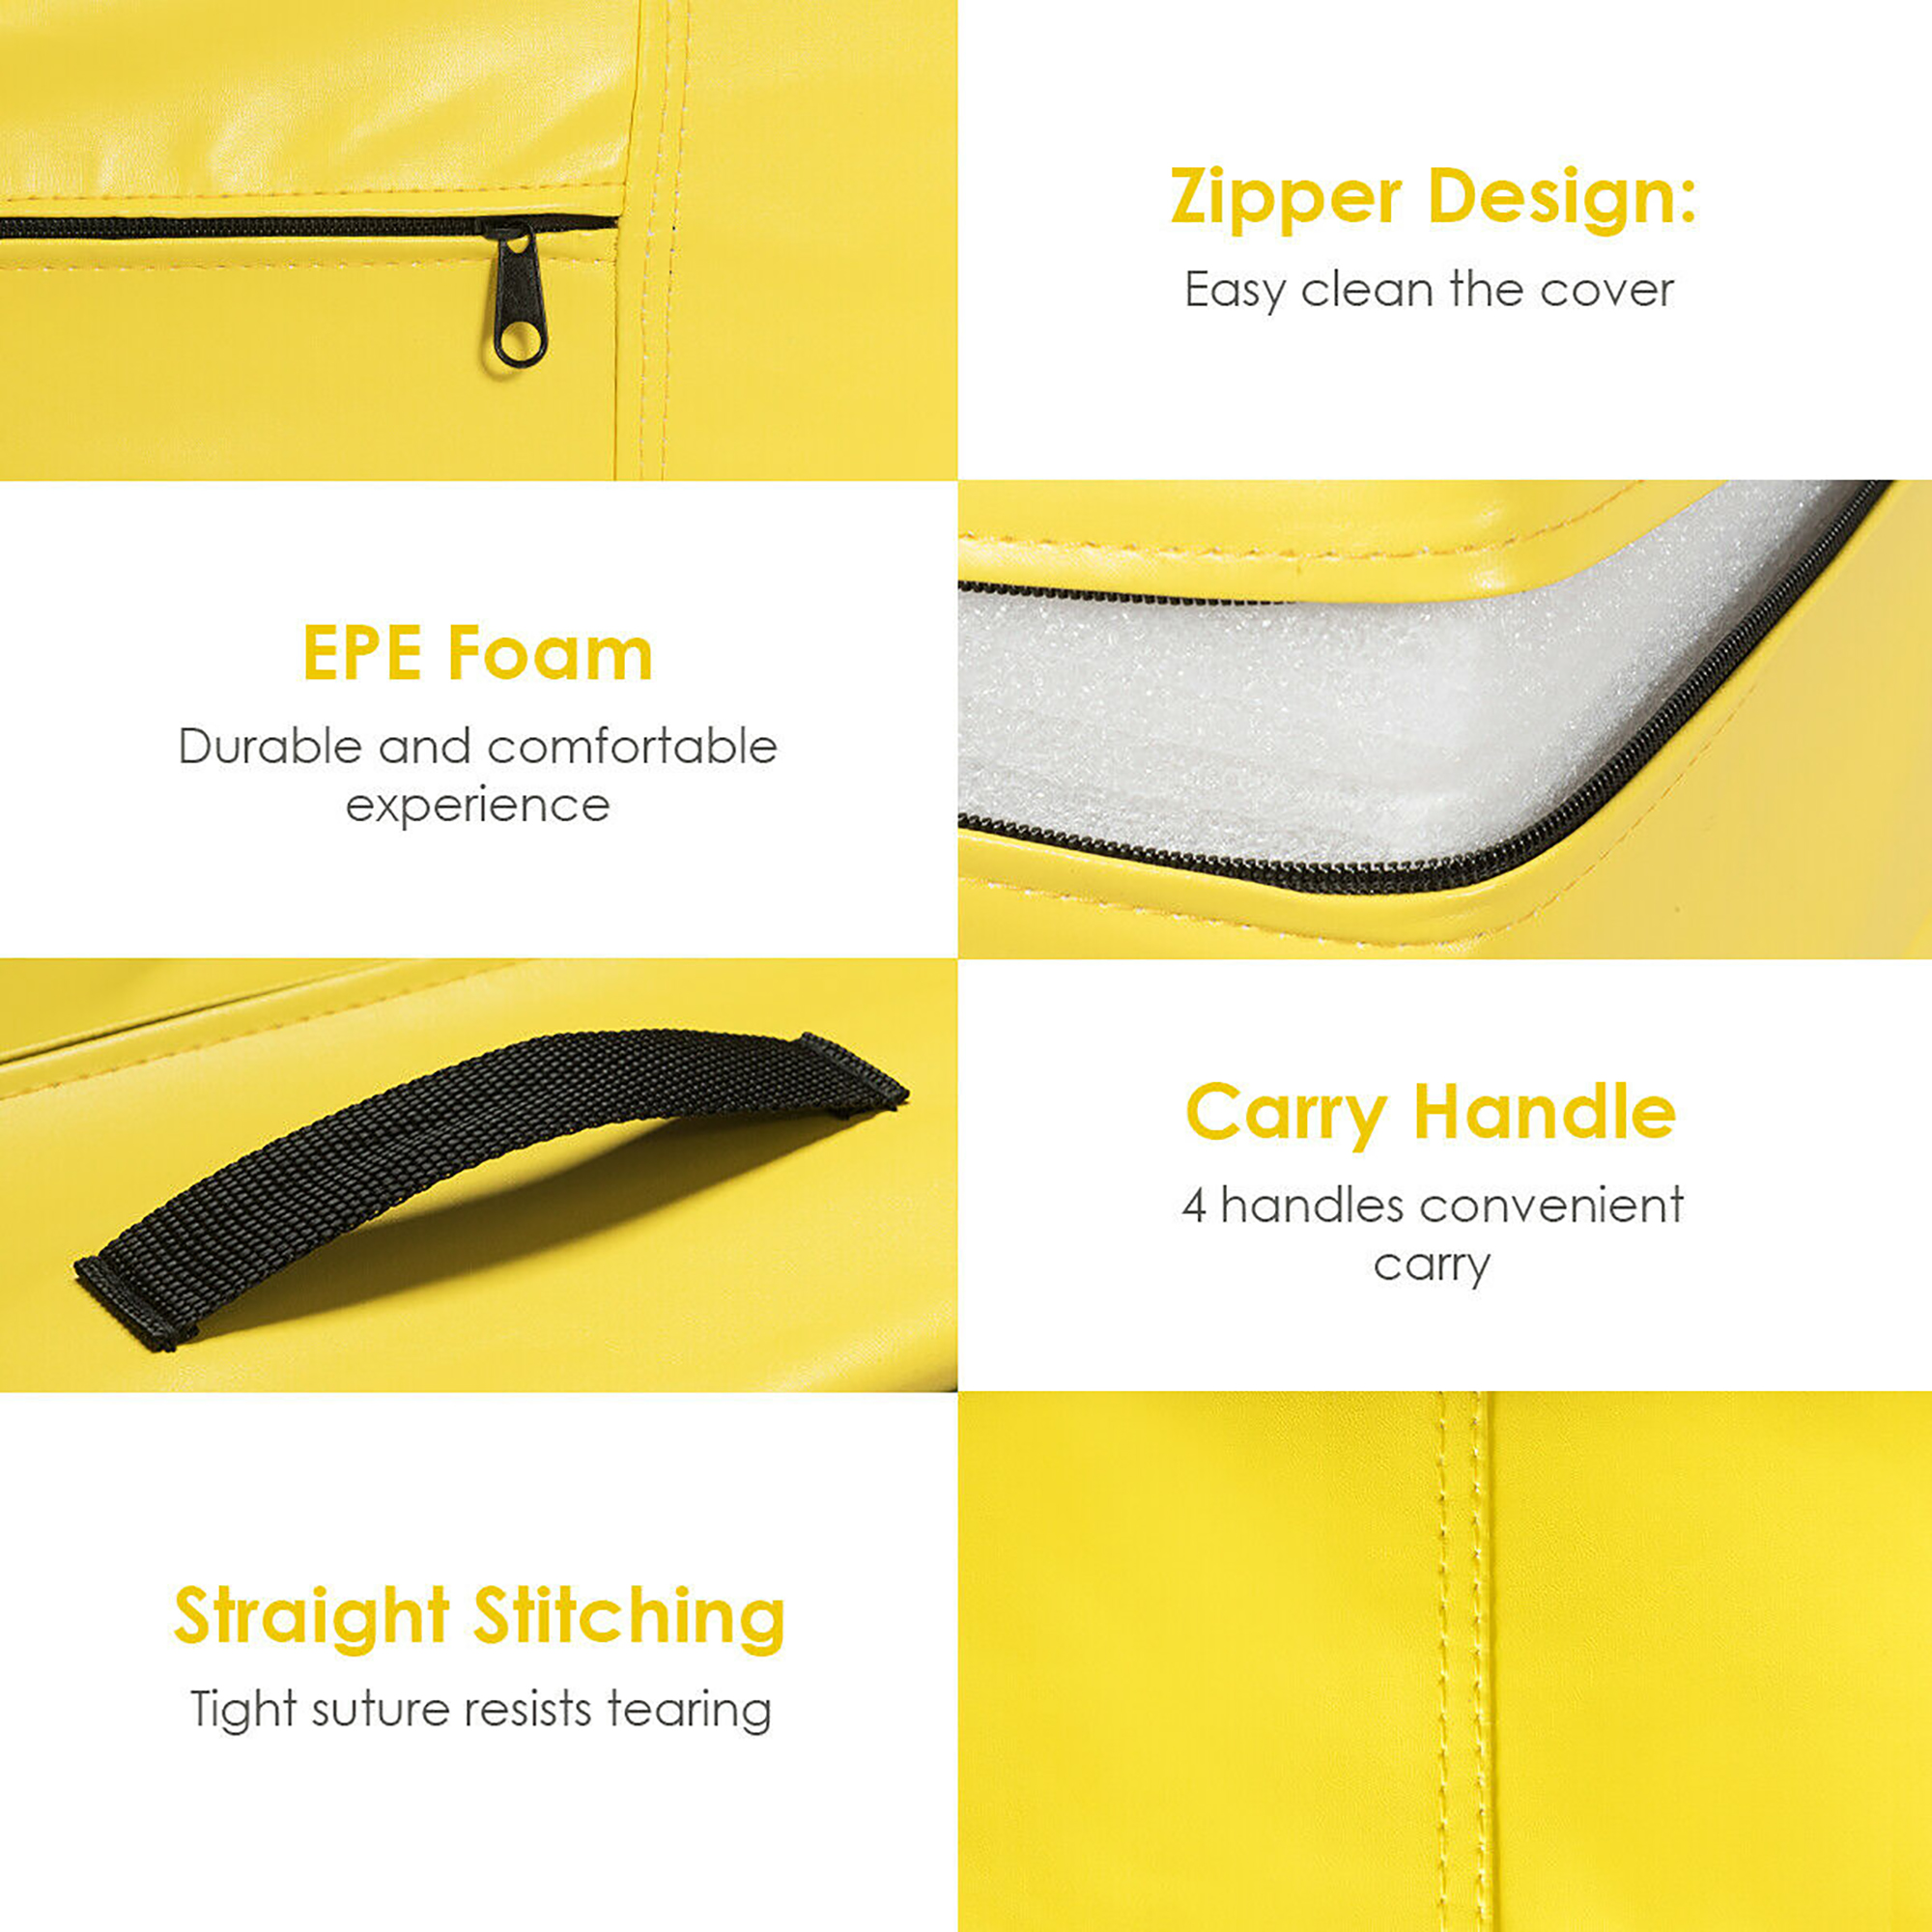 Costway Incline Gymnastics Mat Cheese Wedge Tumbling Mat w/Zipper Handle Home Training